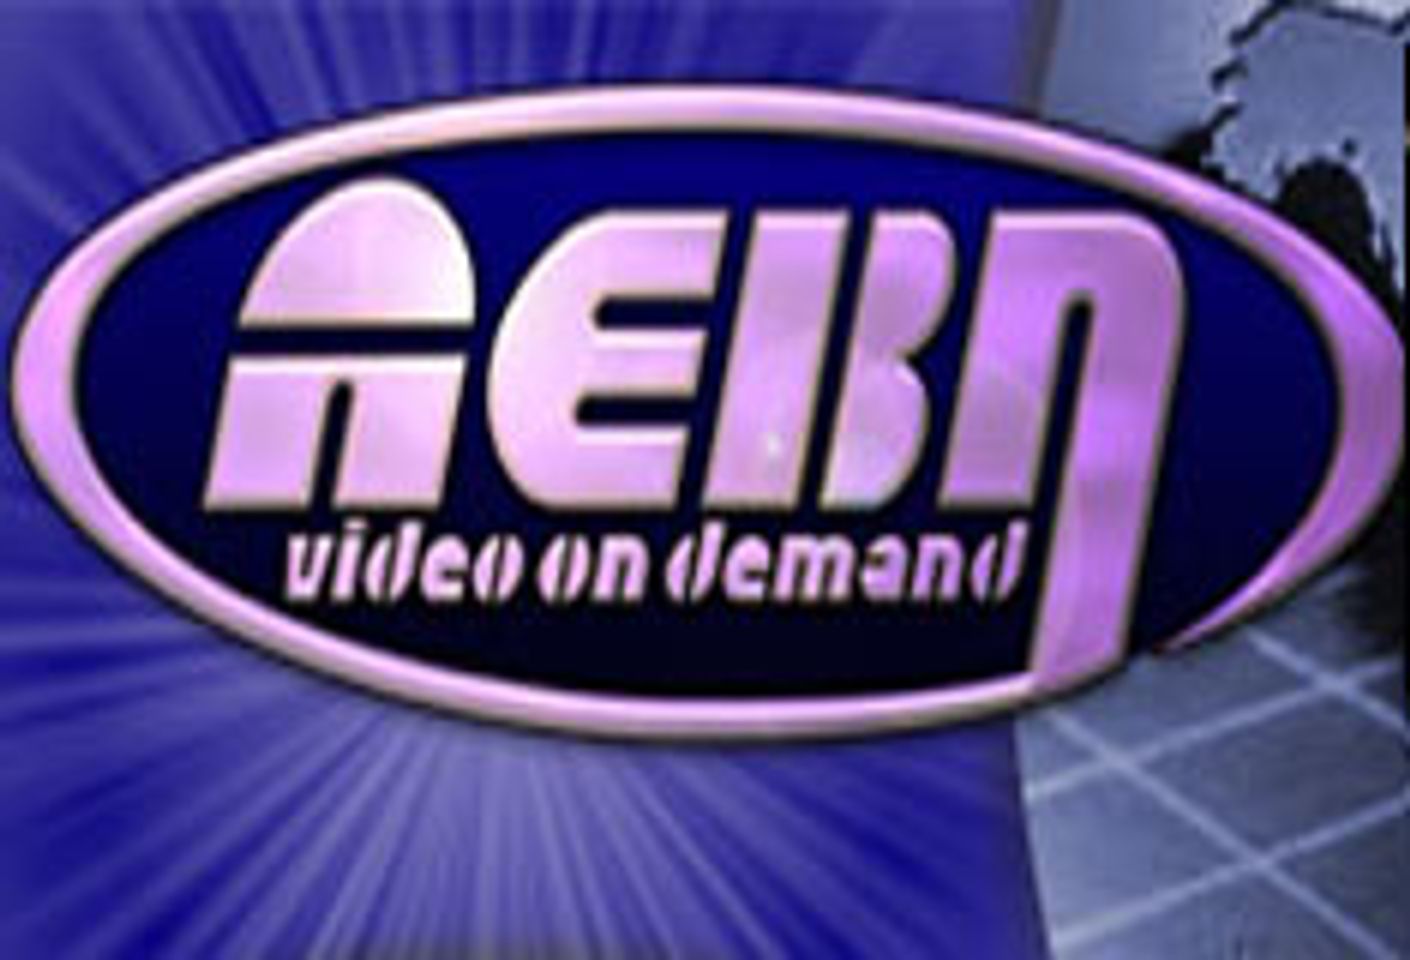 AEBN Offering Hustler Video on Demand